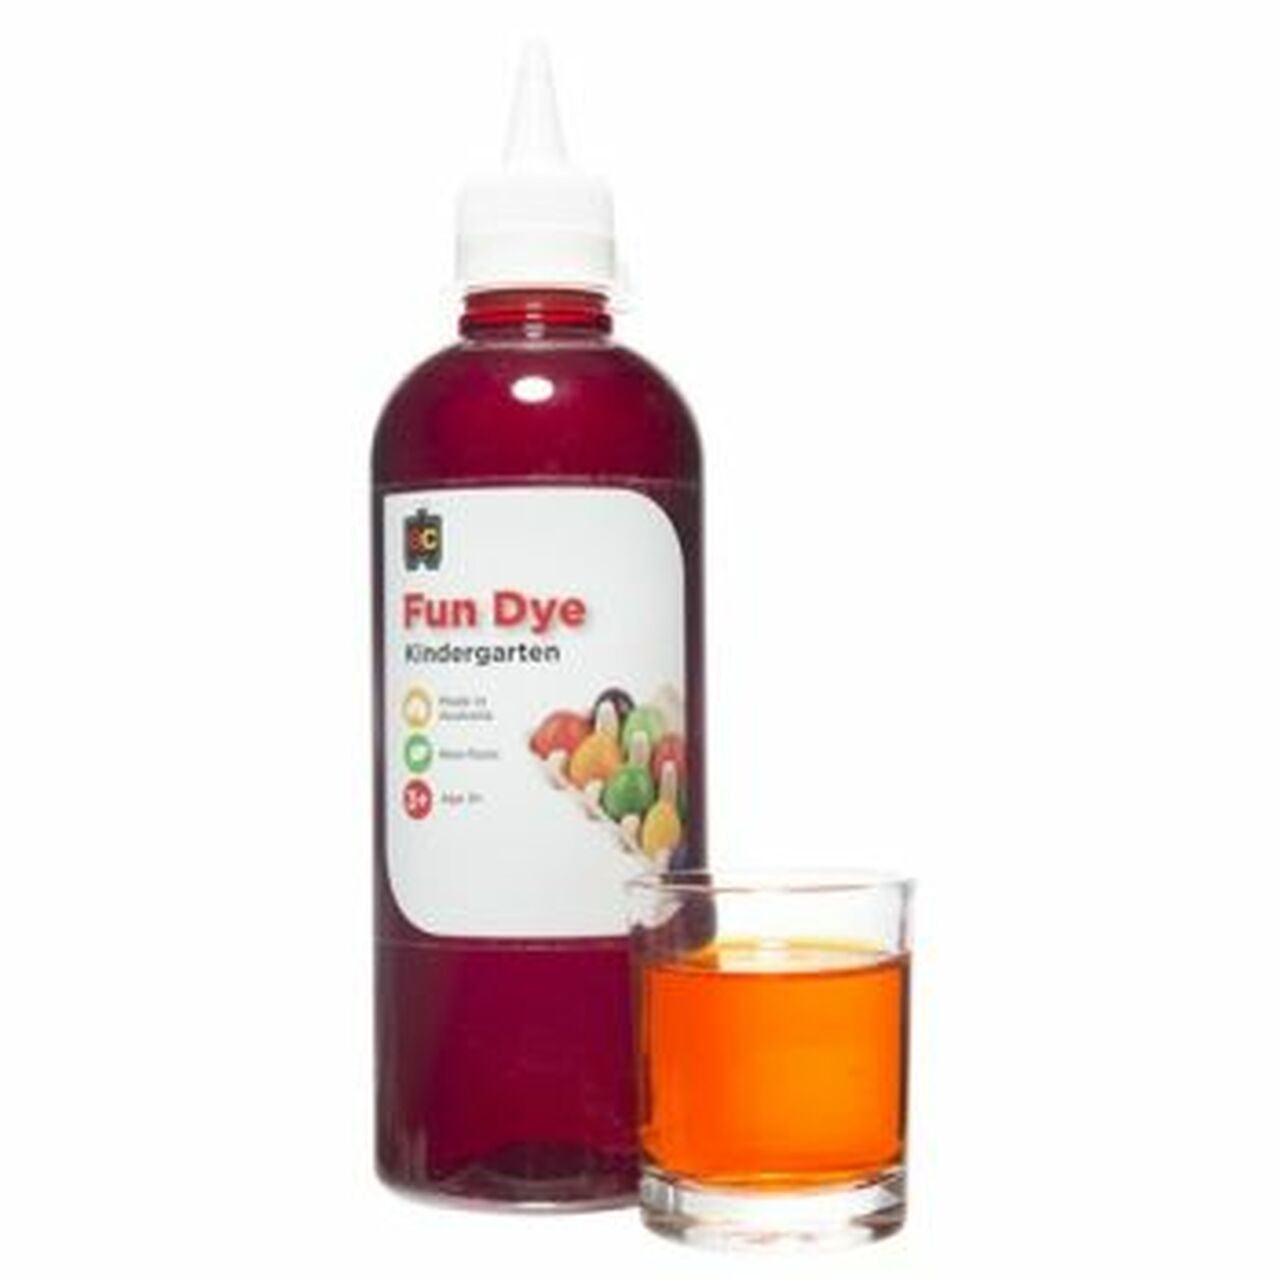 EC - Fun Dye Kindergarten - 500ml - Orange